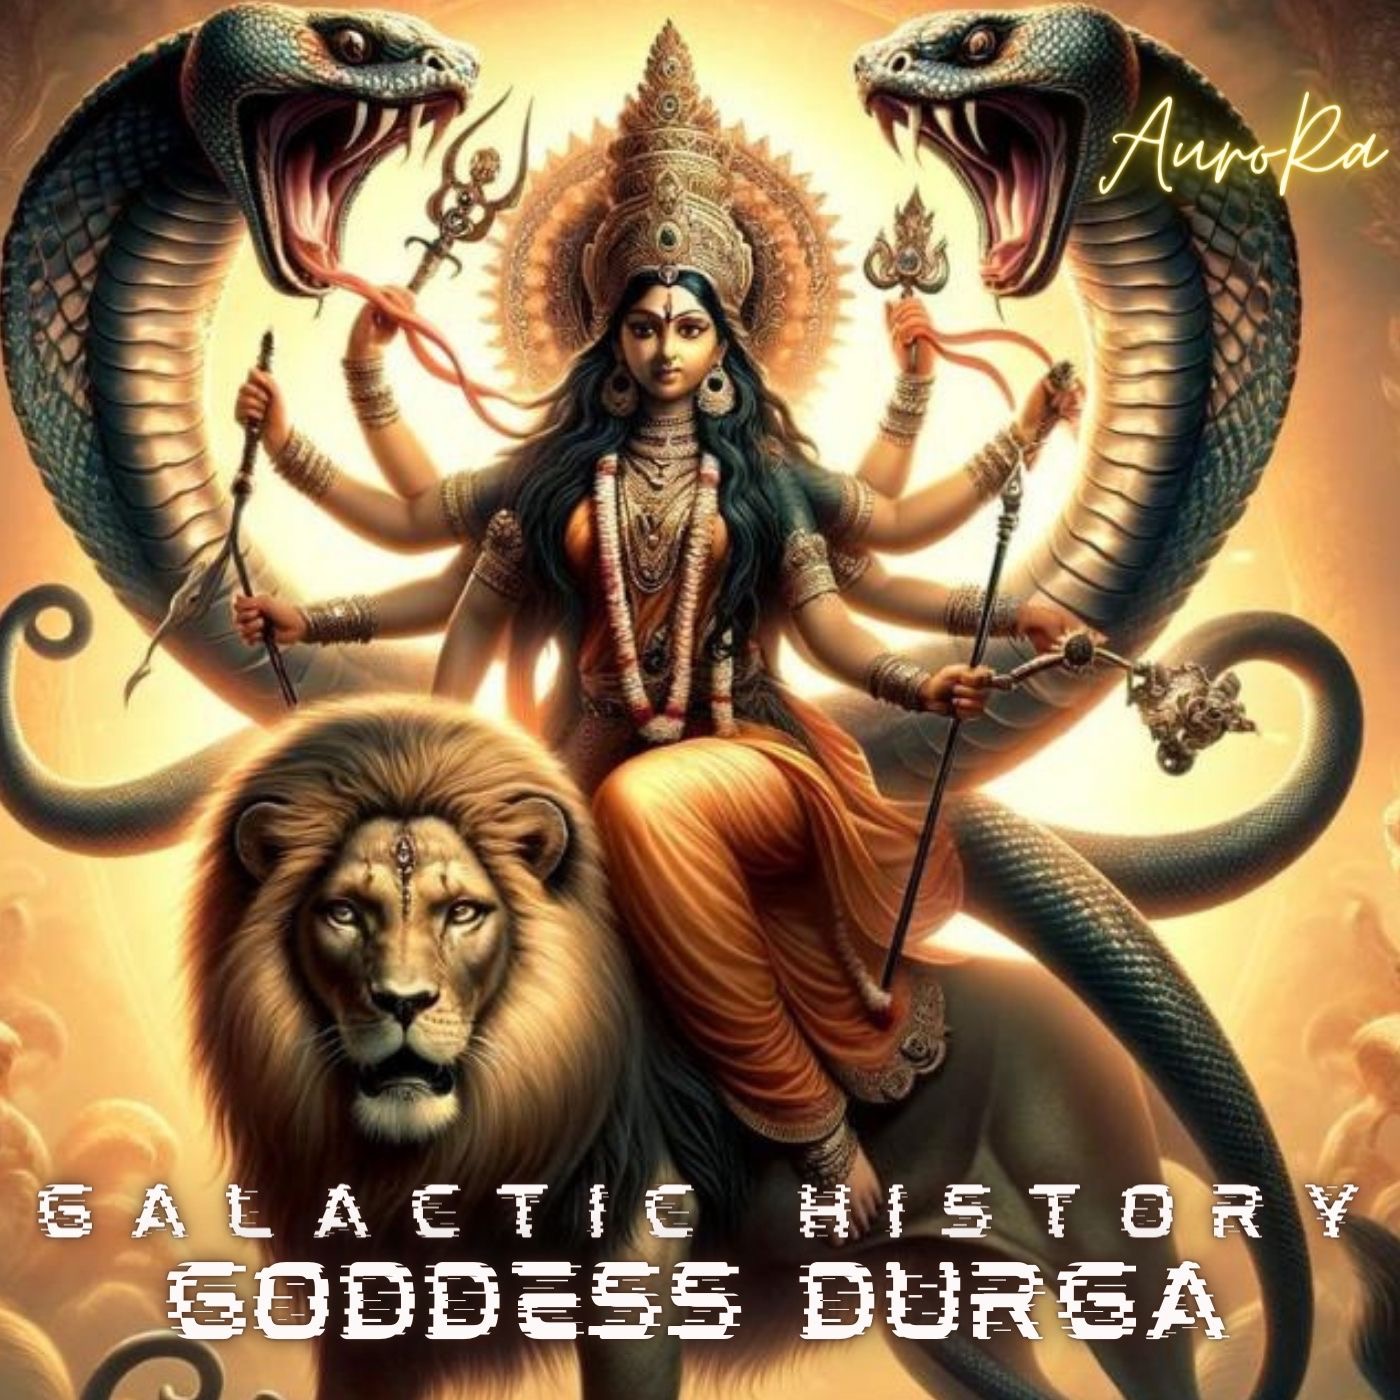 Goddess Durga | Mother of Creation | Galactic History